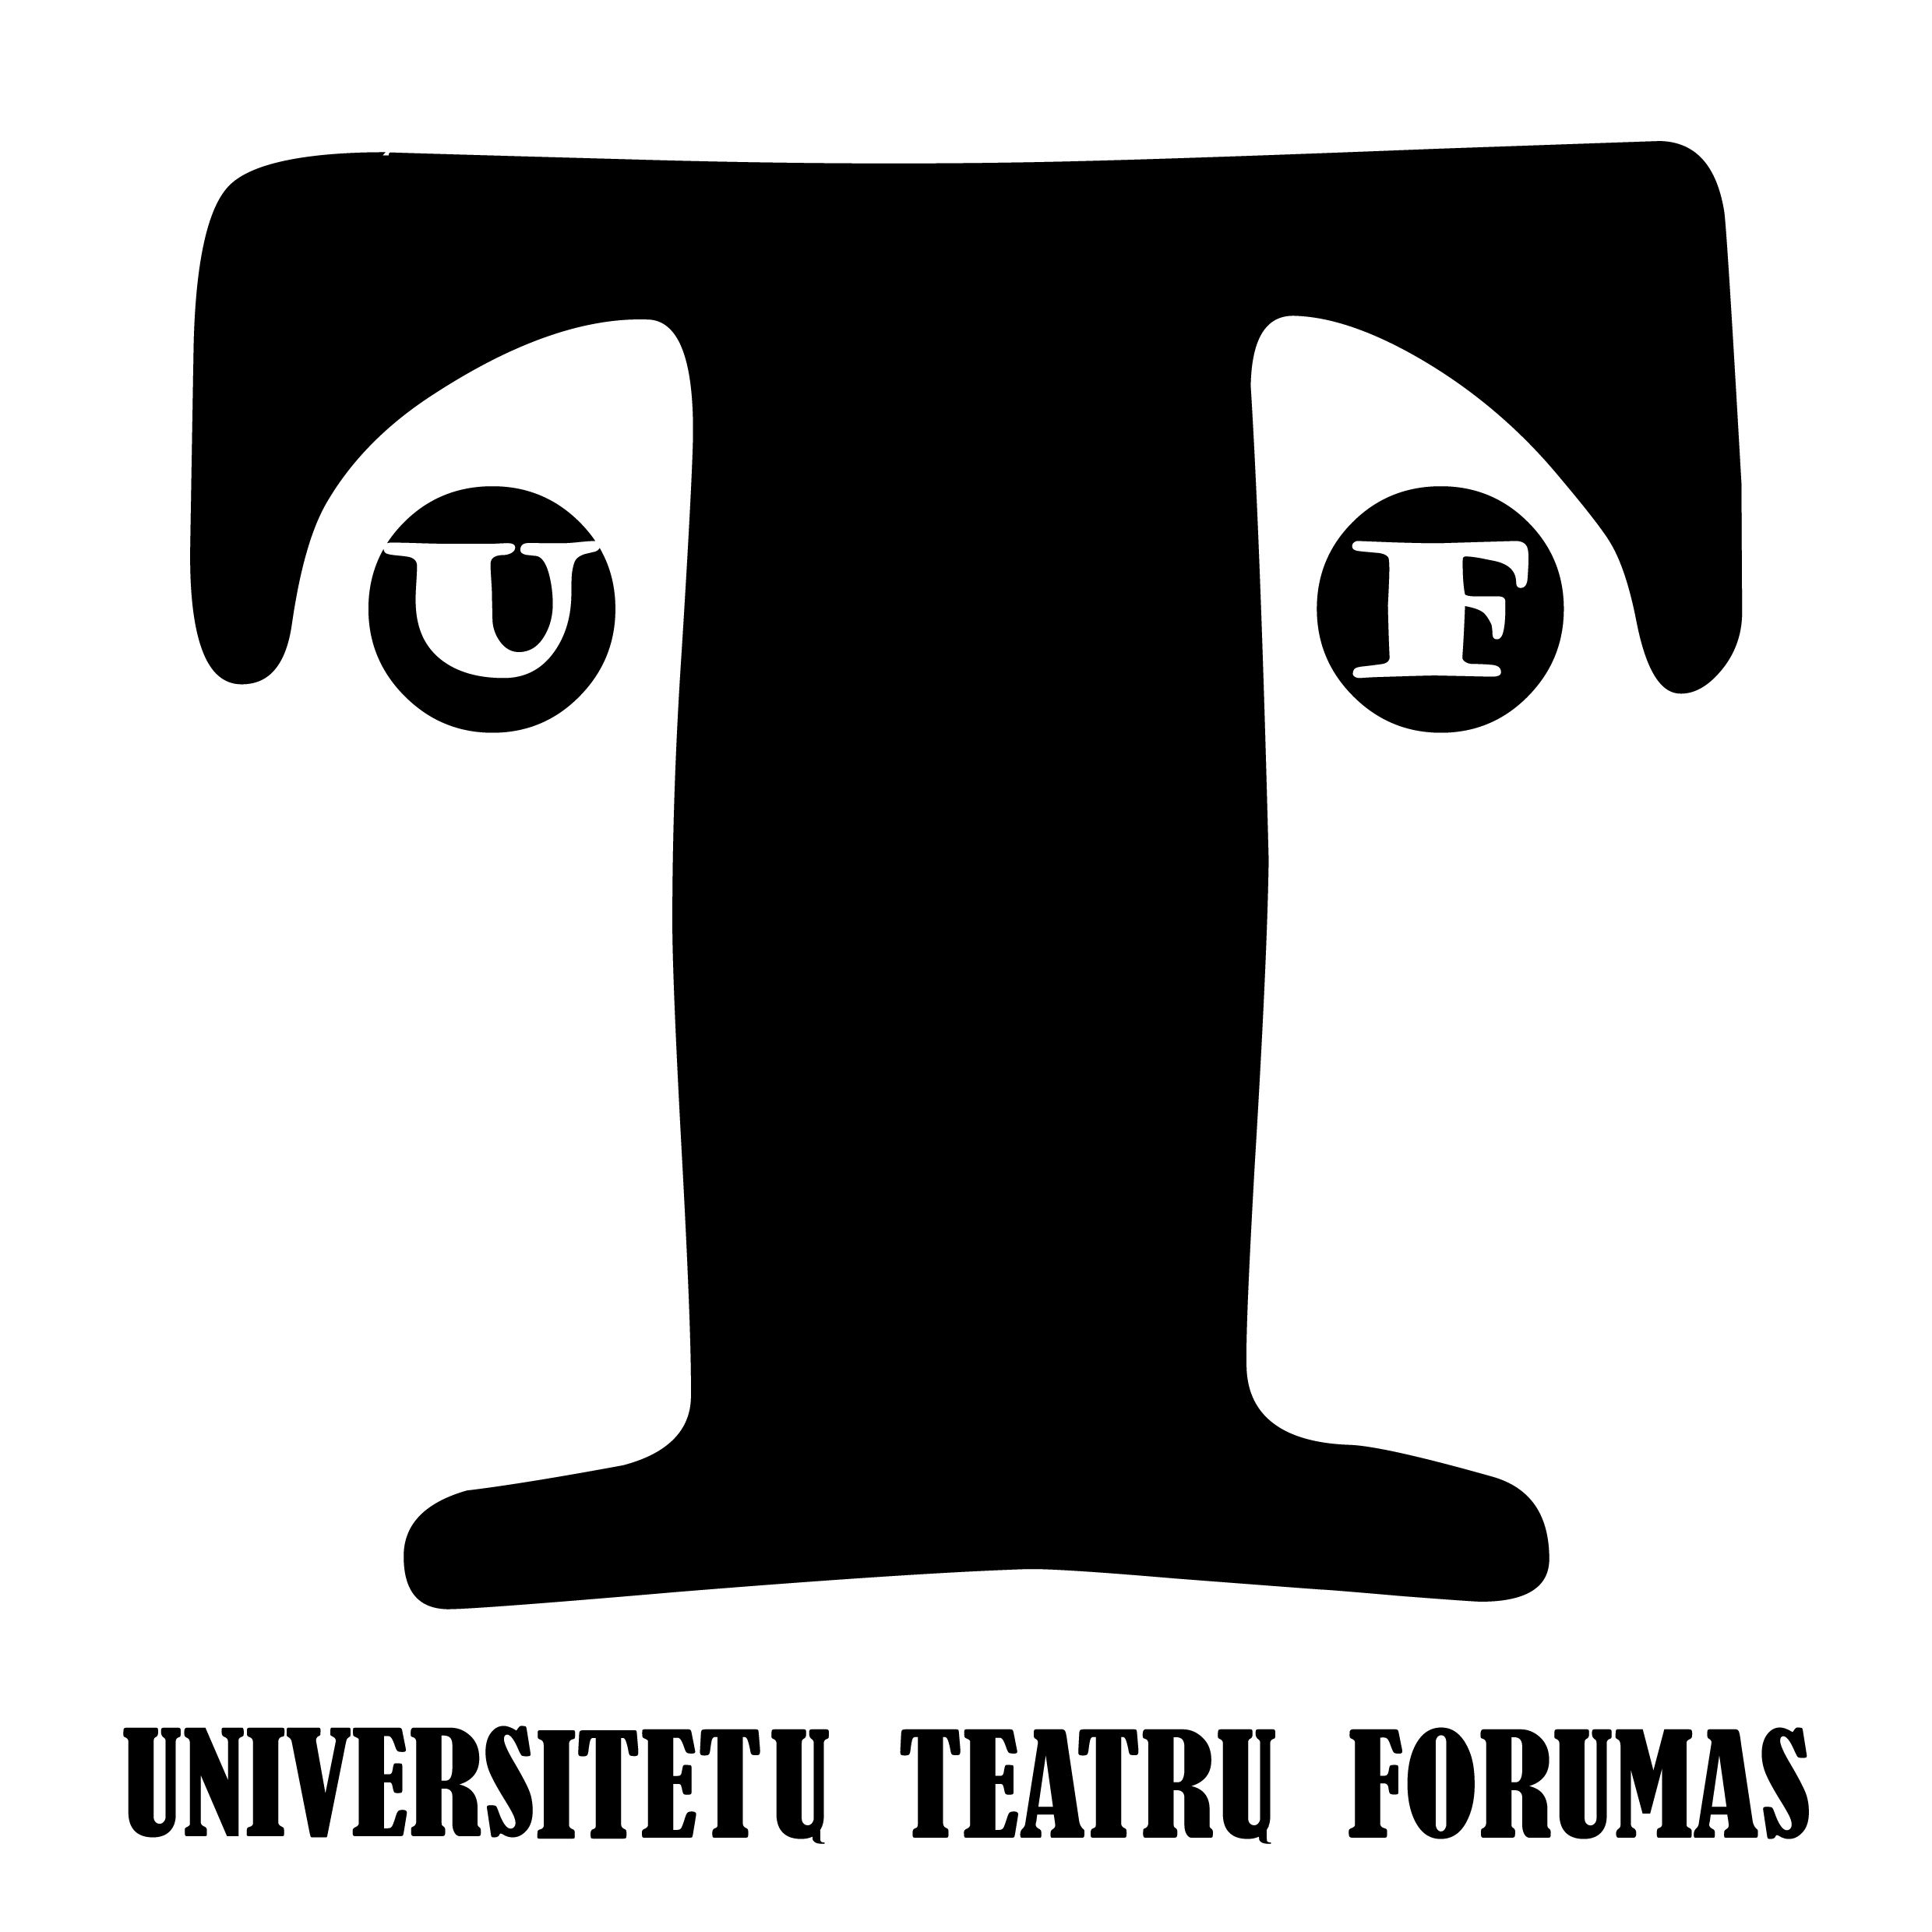 Teatru forumas logo